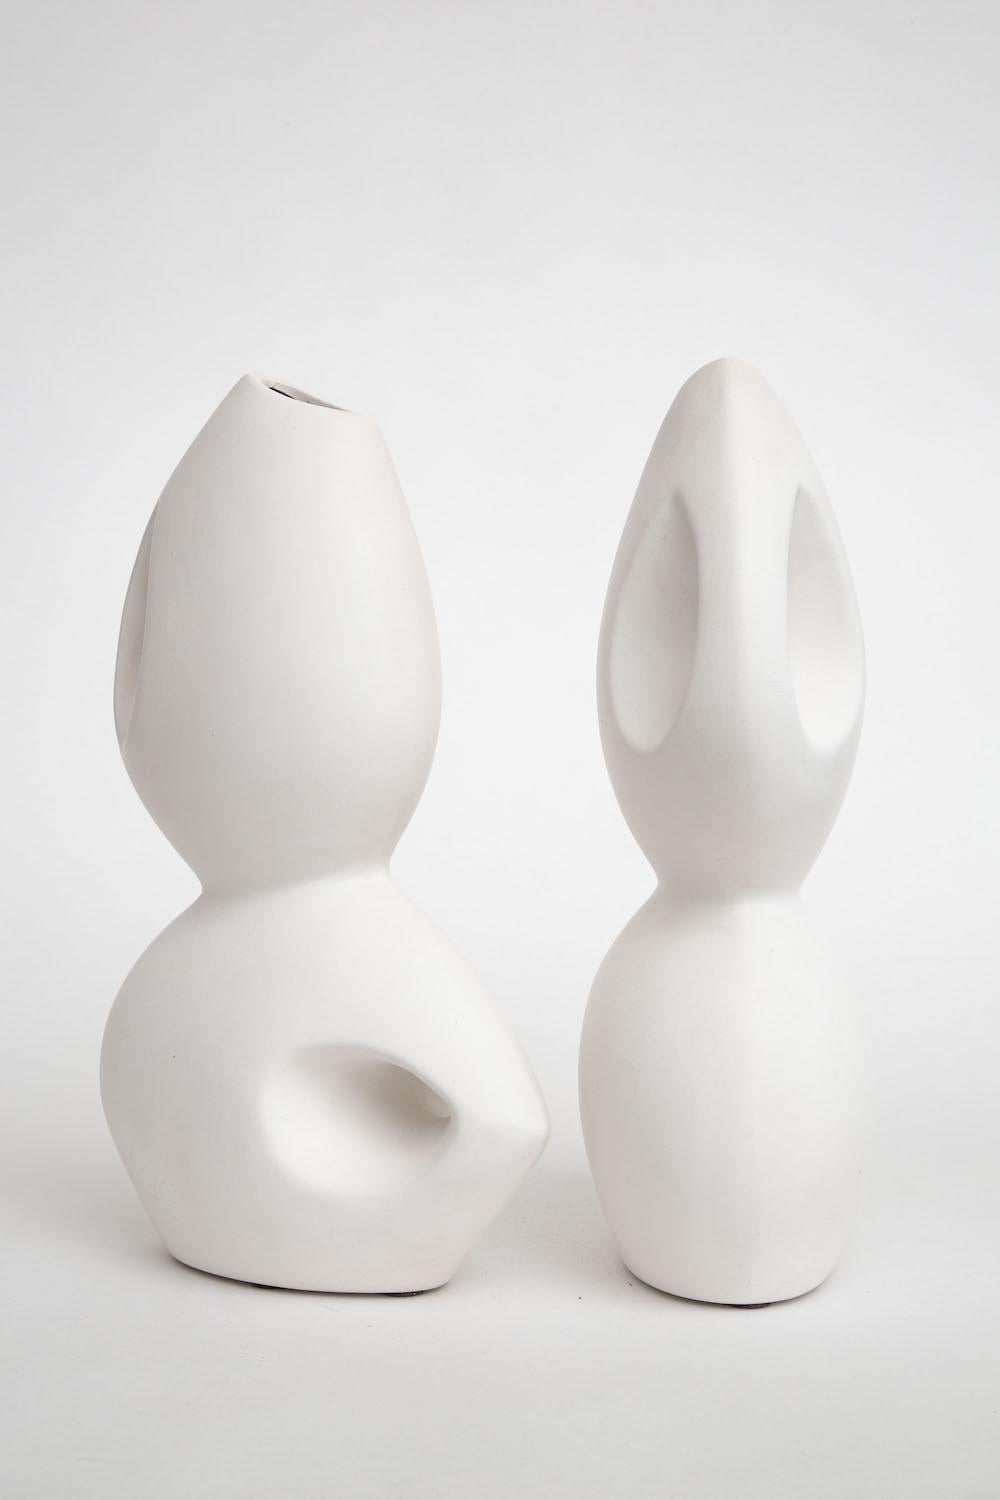 Organic Modern Italian Space Age Sculptural White Ceramics Vintage Pair of